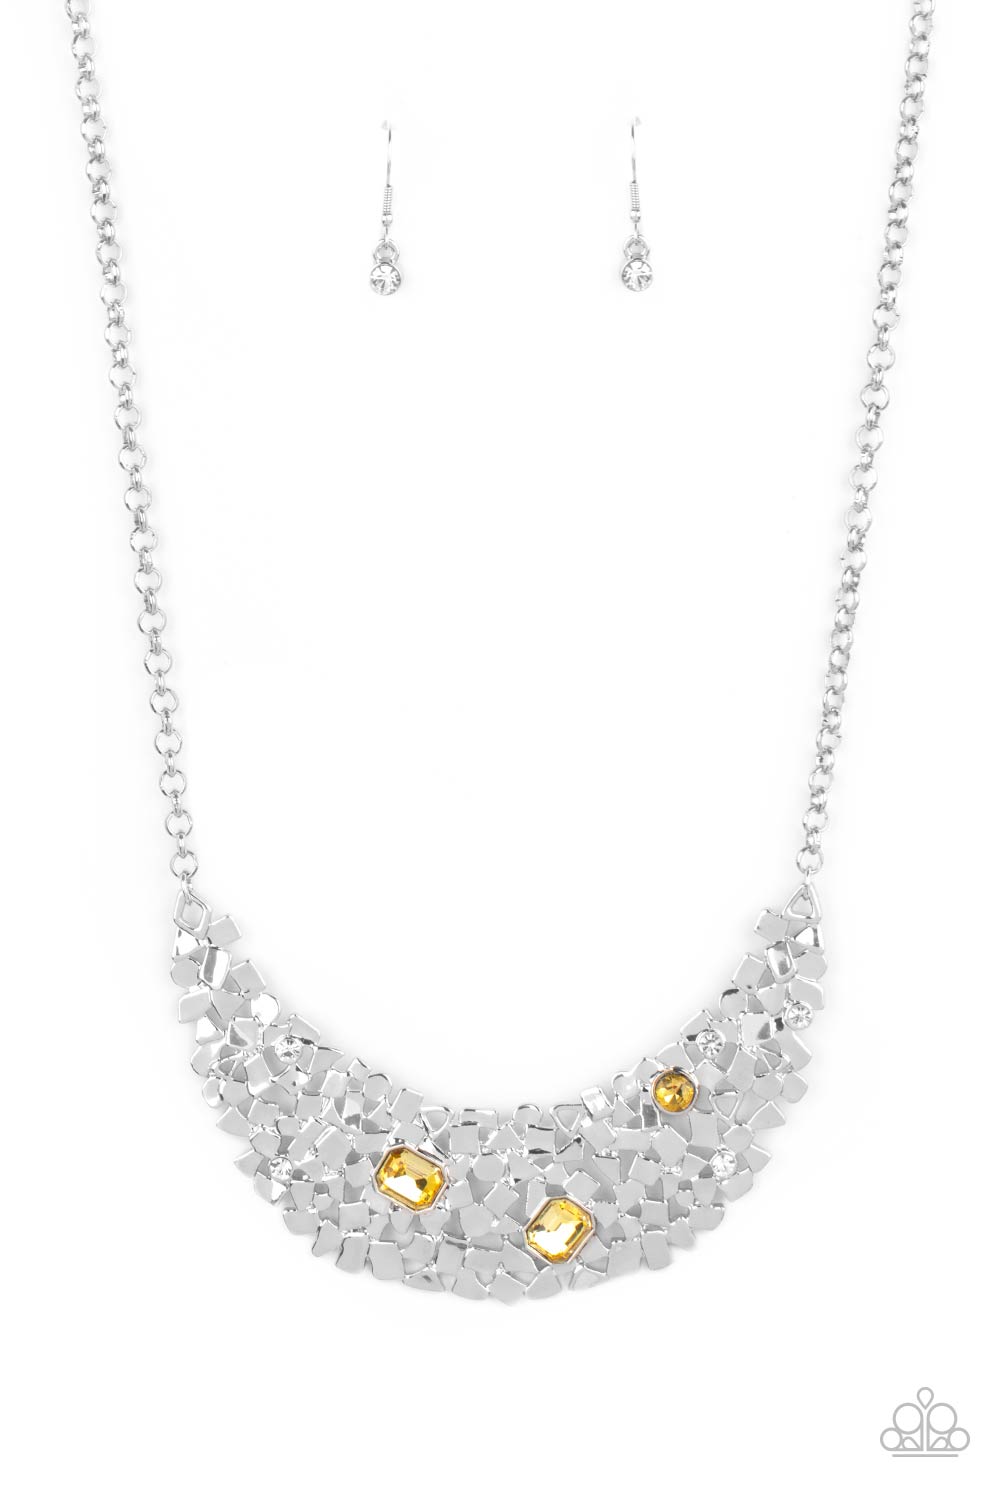 Paparazzi Fabulously Fragmented - Yellow Necklace - A Finishing Touch Jewelry